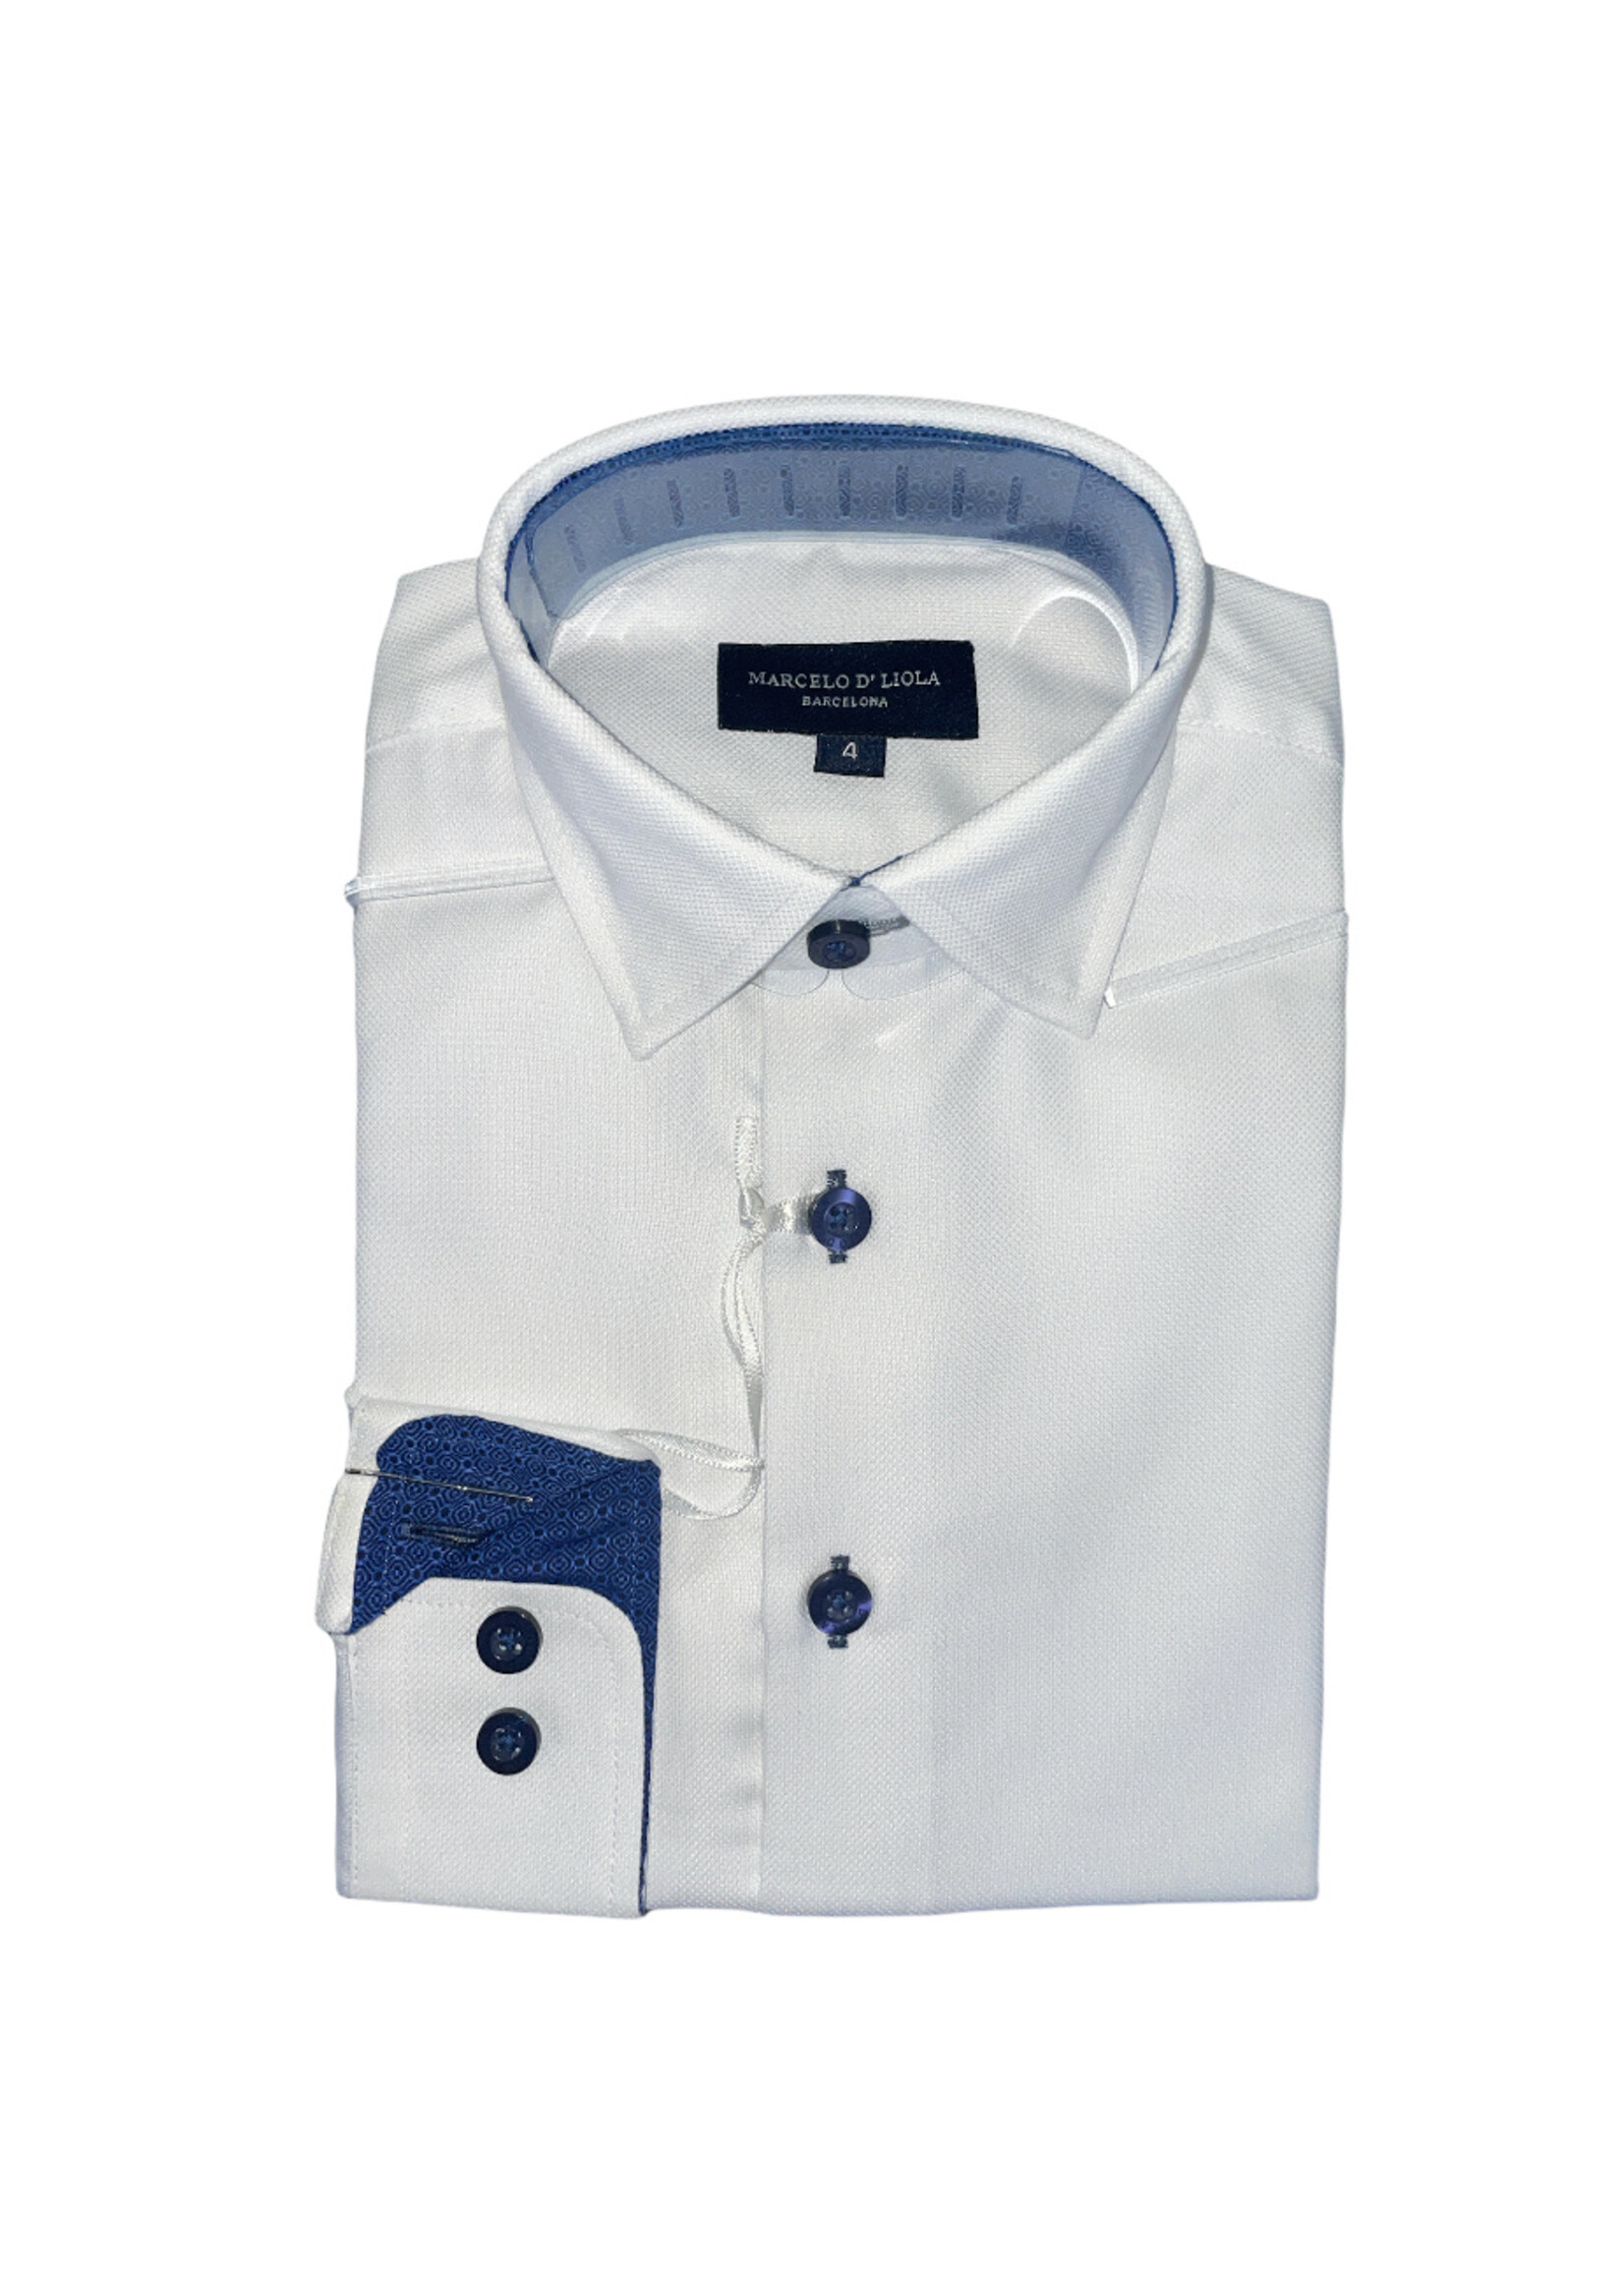 Marcelo D'Liola White w/Navy Contrast Cuff L/S Shirt